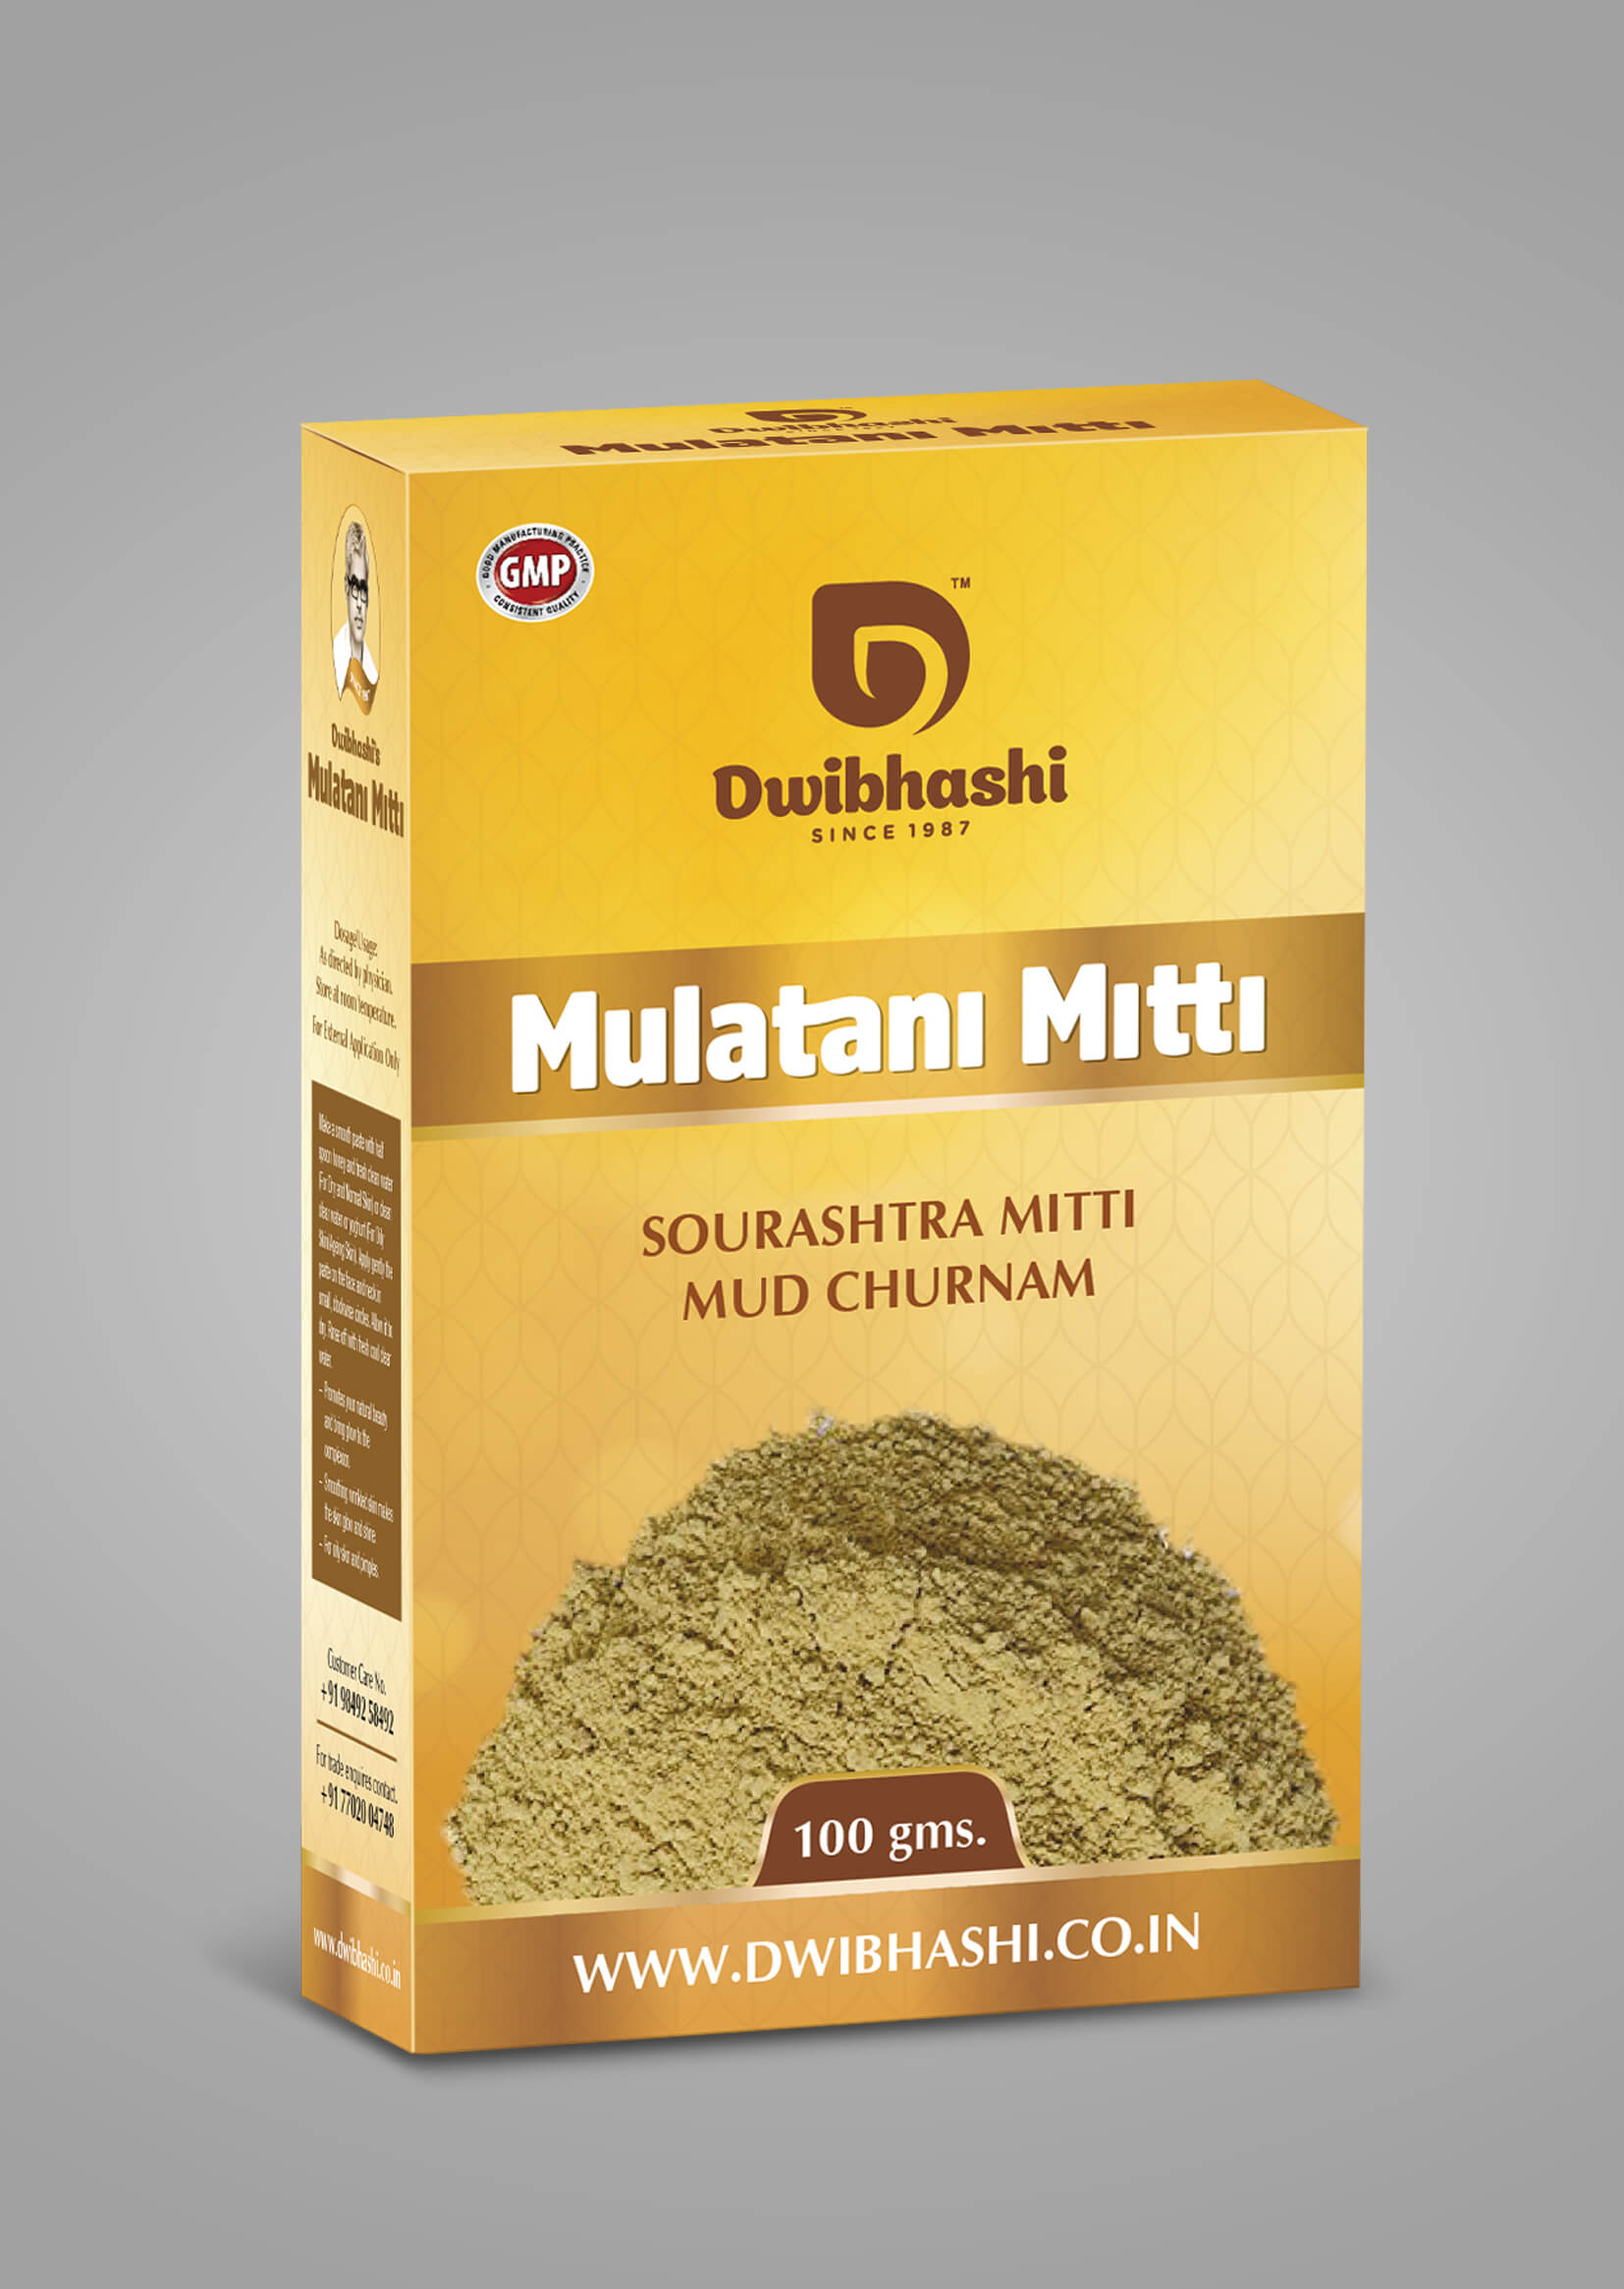 Buy Multani Mitti Online